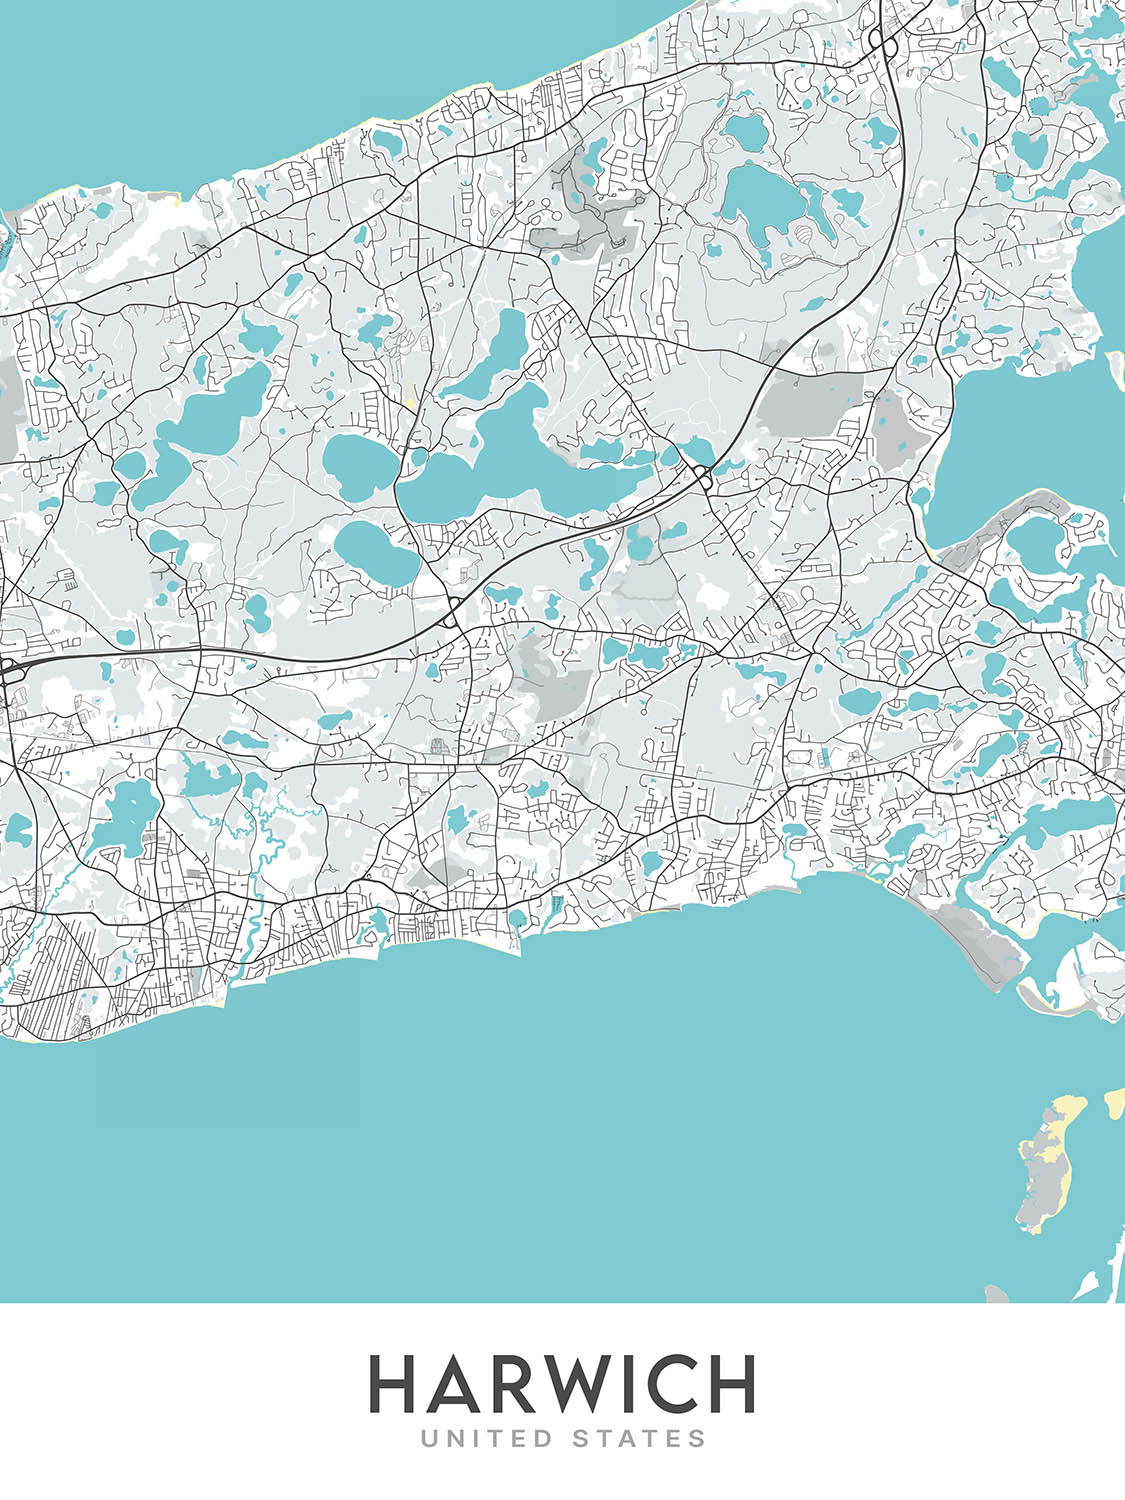 Mapa moderno de la ciudad de Harwich, Massachusetts: Red River Beach, Saquatucket Harbor, Wychmere Harbor, Allen Harbor, Herring River